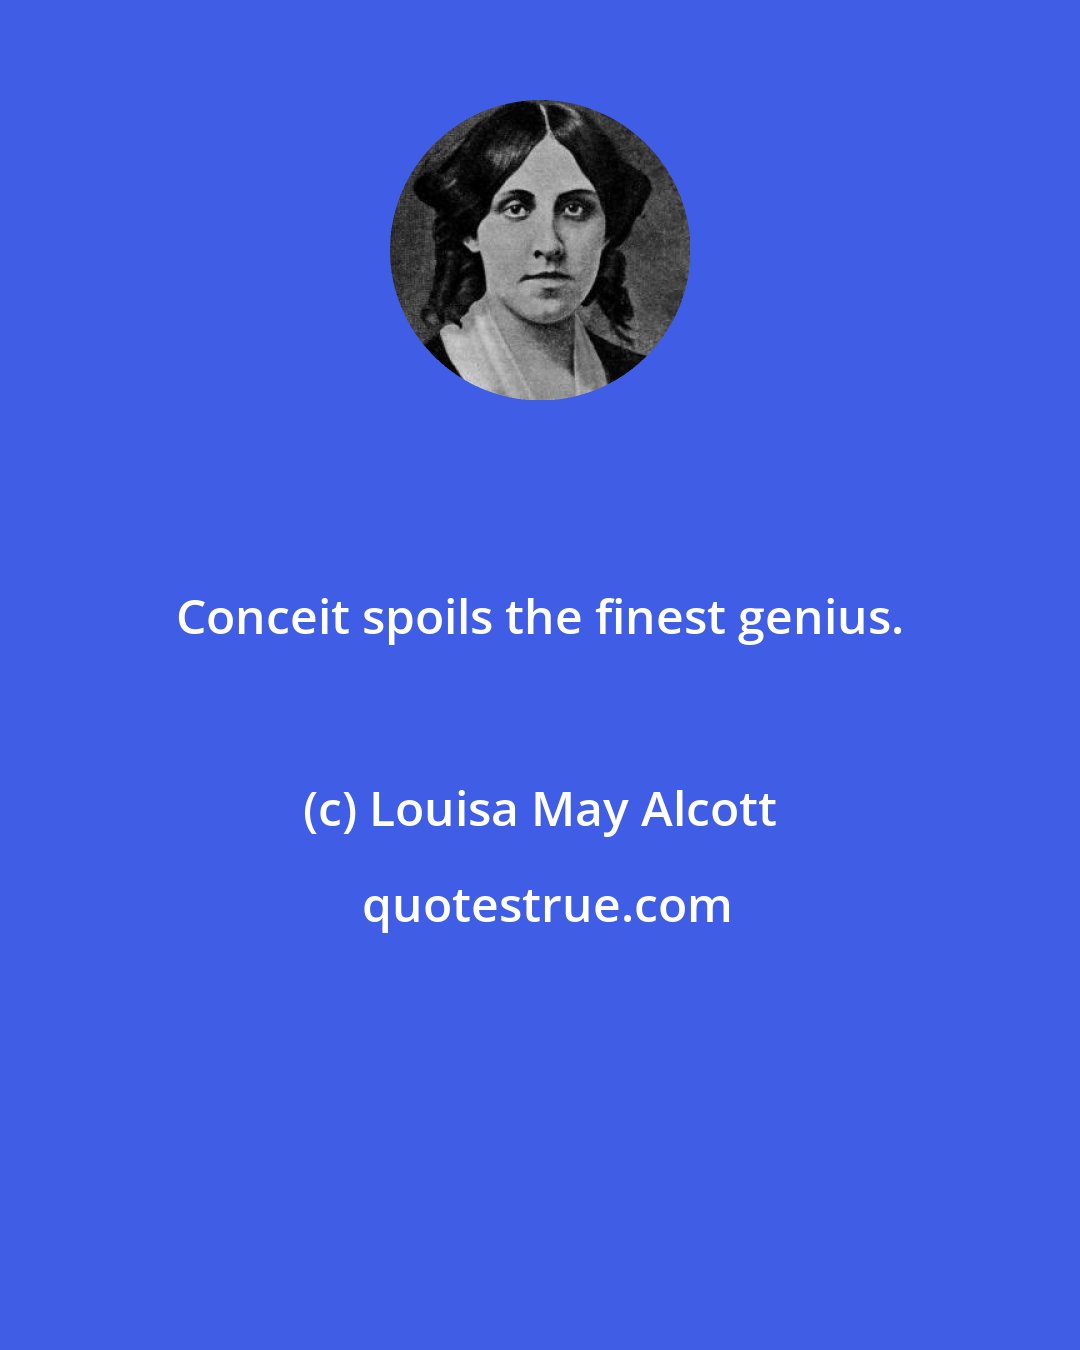 Louisa May Alcott: Conceit spoils the finest genius.